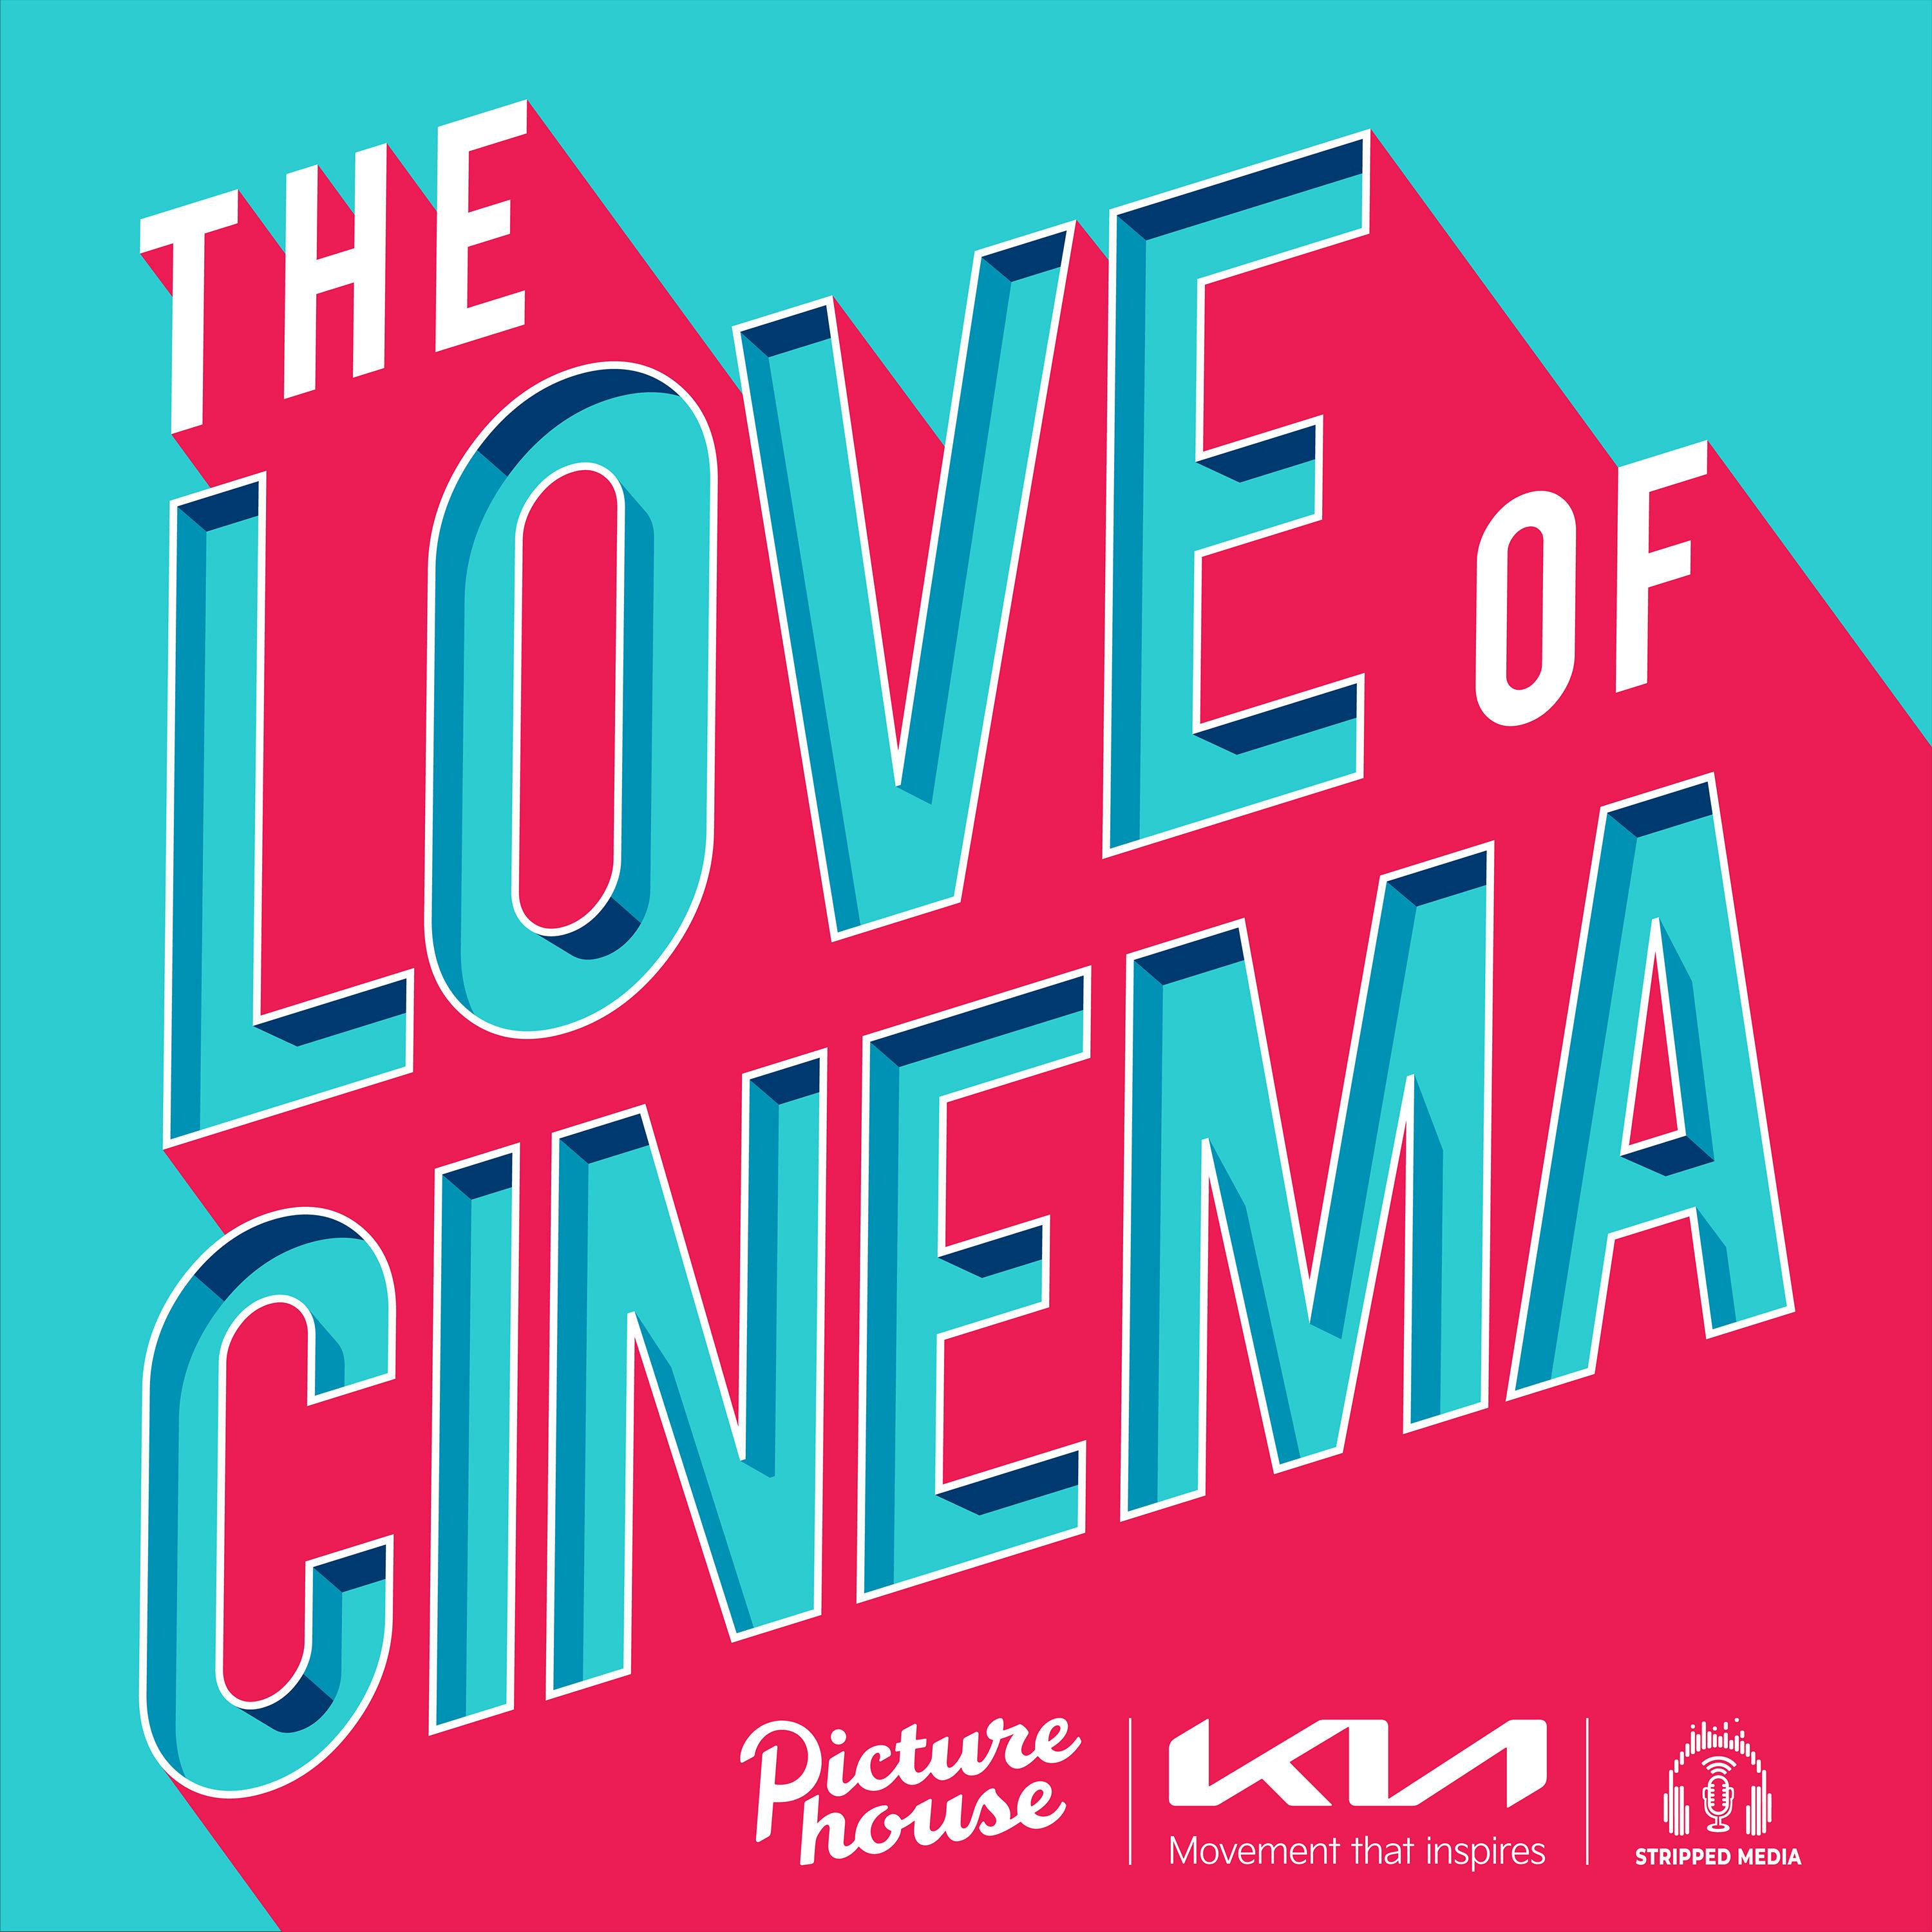 The Love Of Cinema